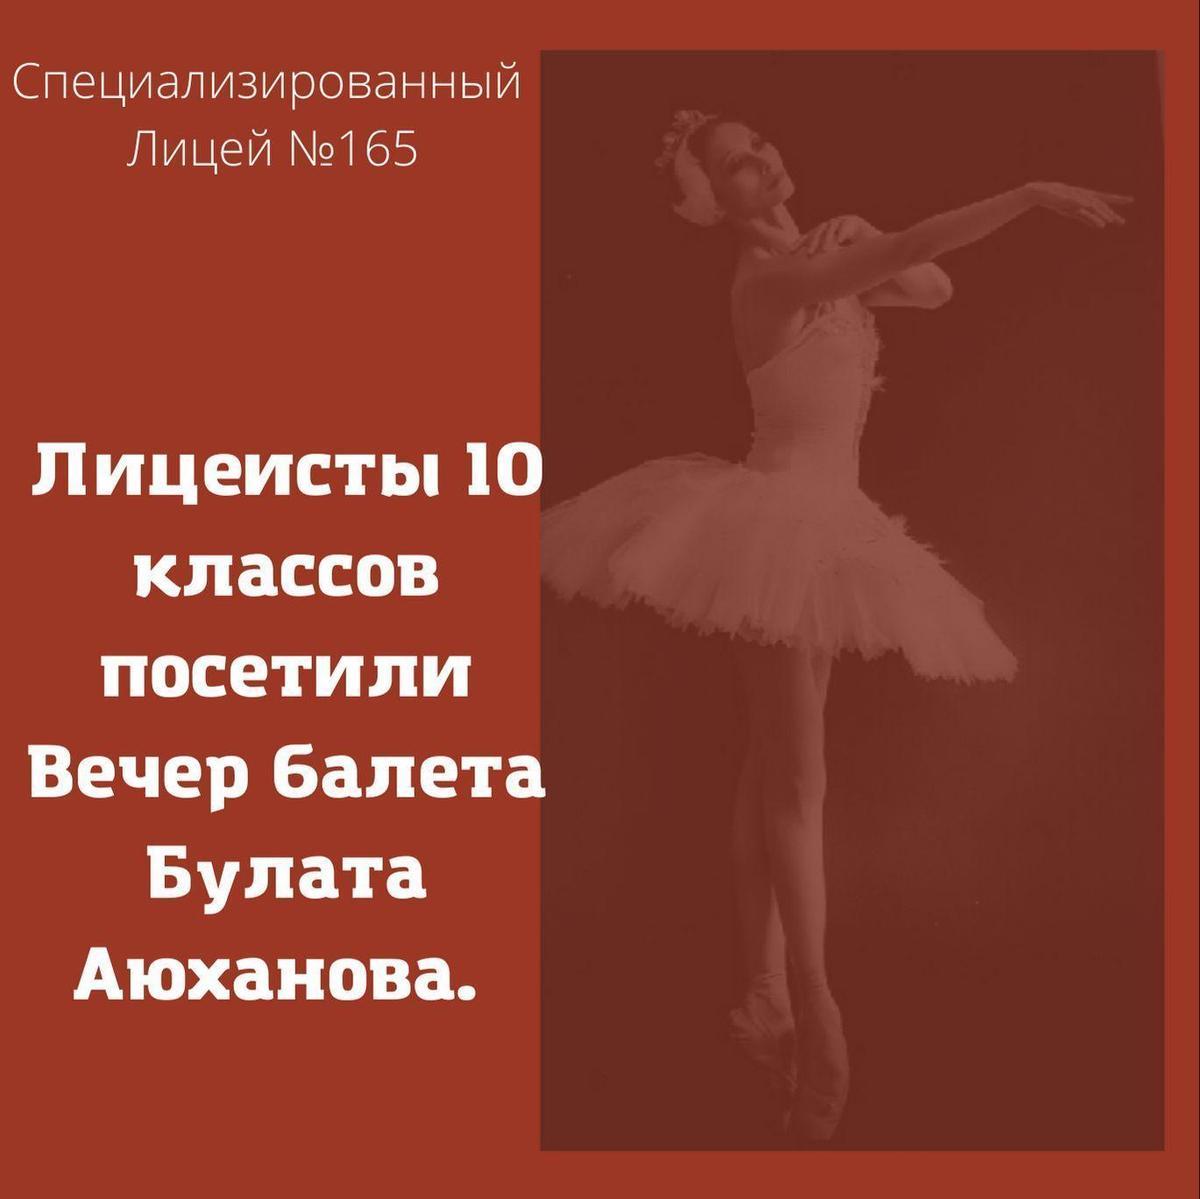 Лицеисты 10 кл посетили Вечер балета Булата Аюханова